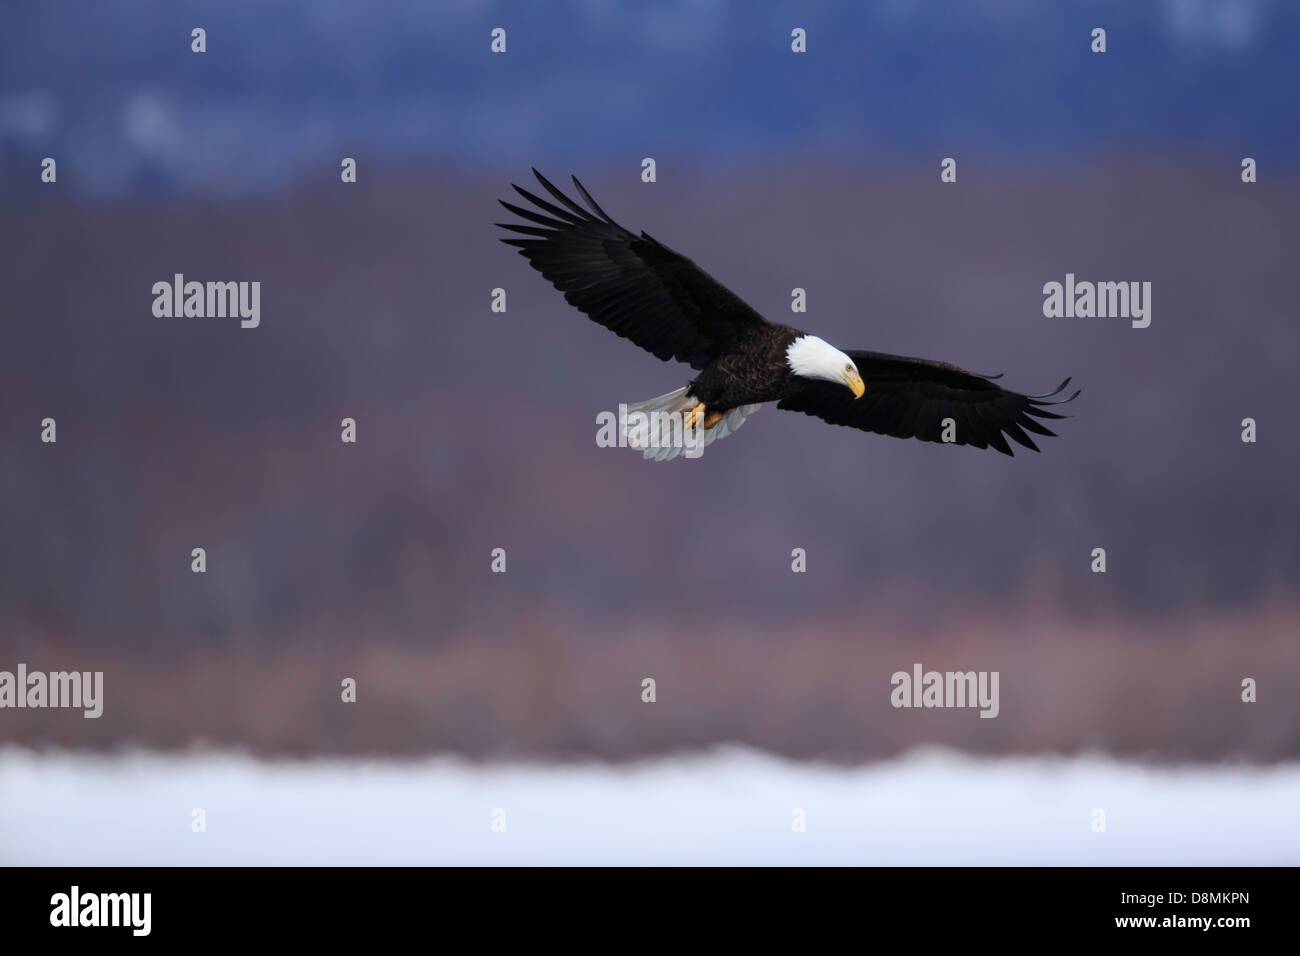 Aquila calva (Haliaeetus leucocephalus) caccia oltre il Fiume Mississippi in inverno - Minnesota, Stati Uniti d'America. Foto Stock